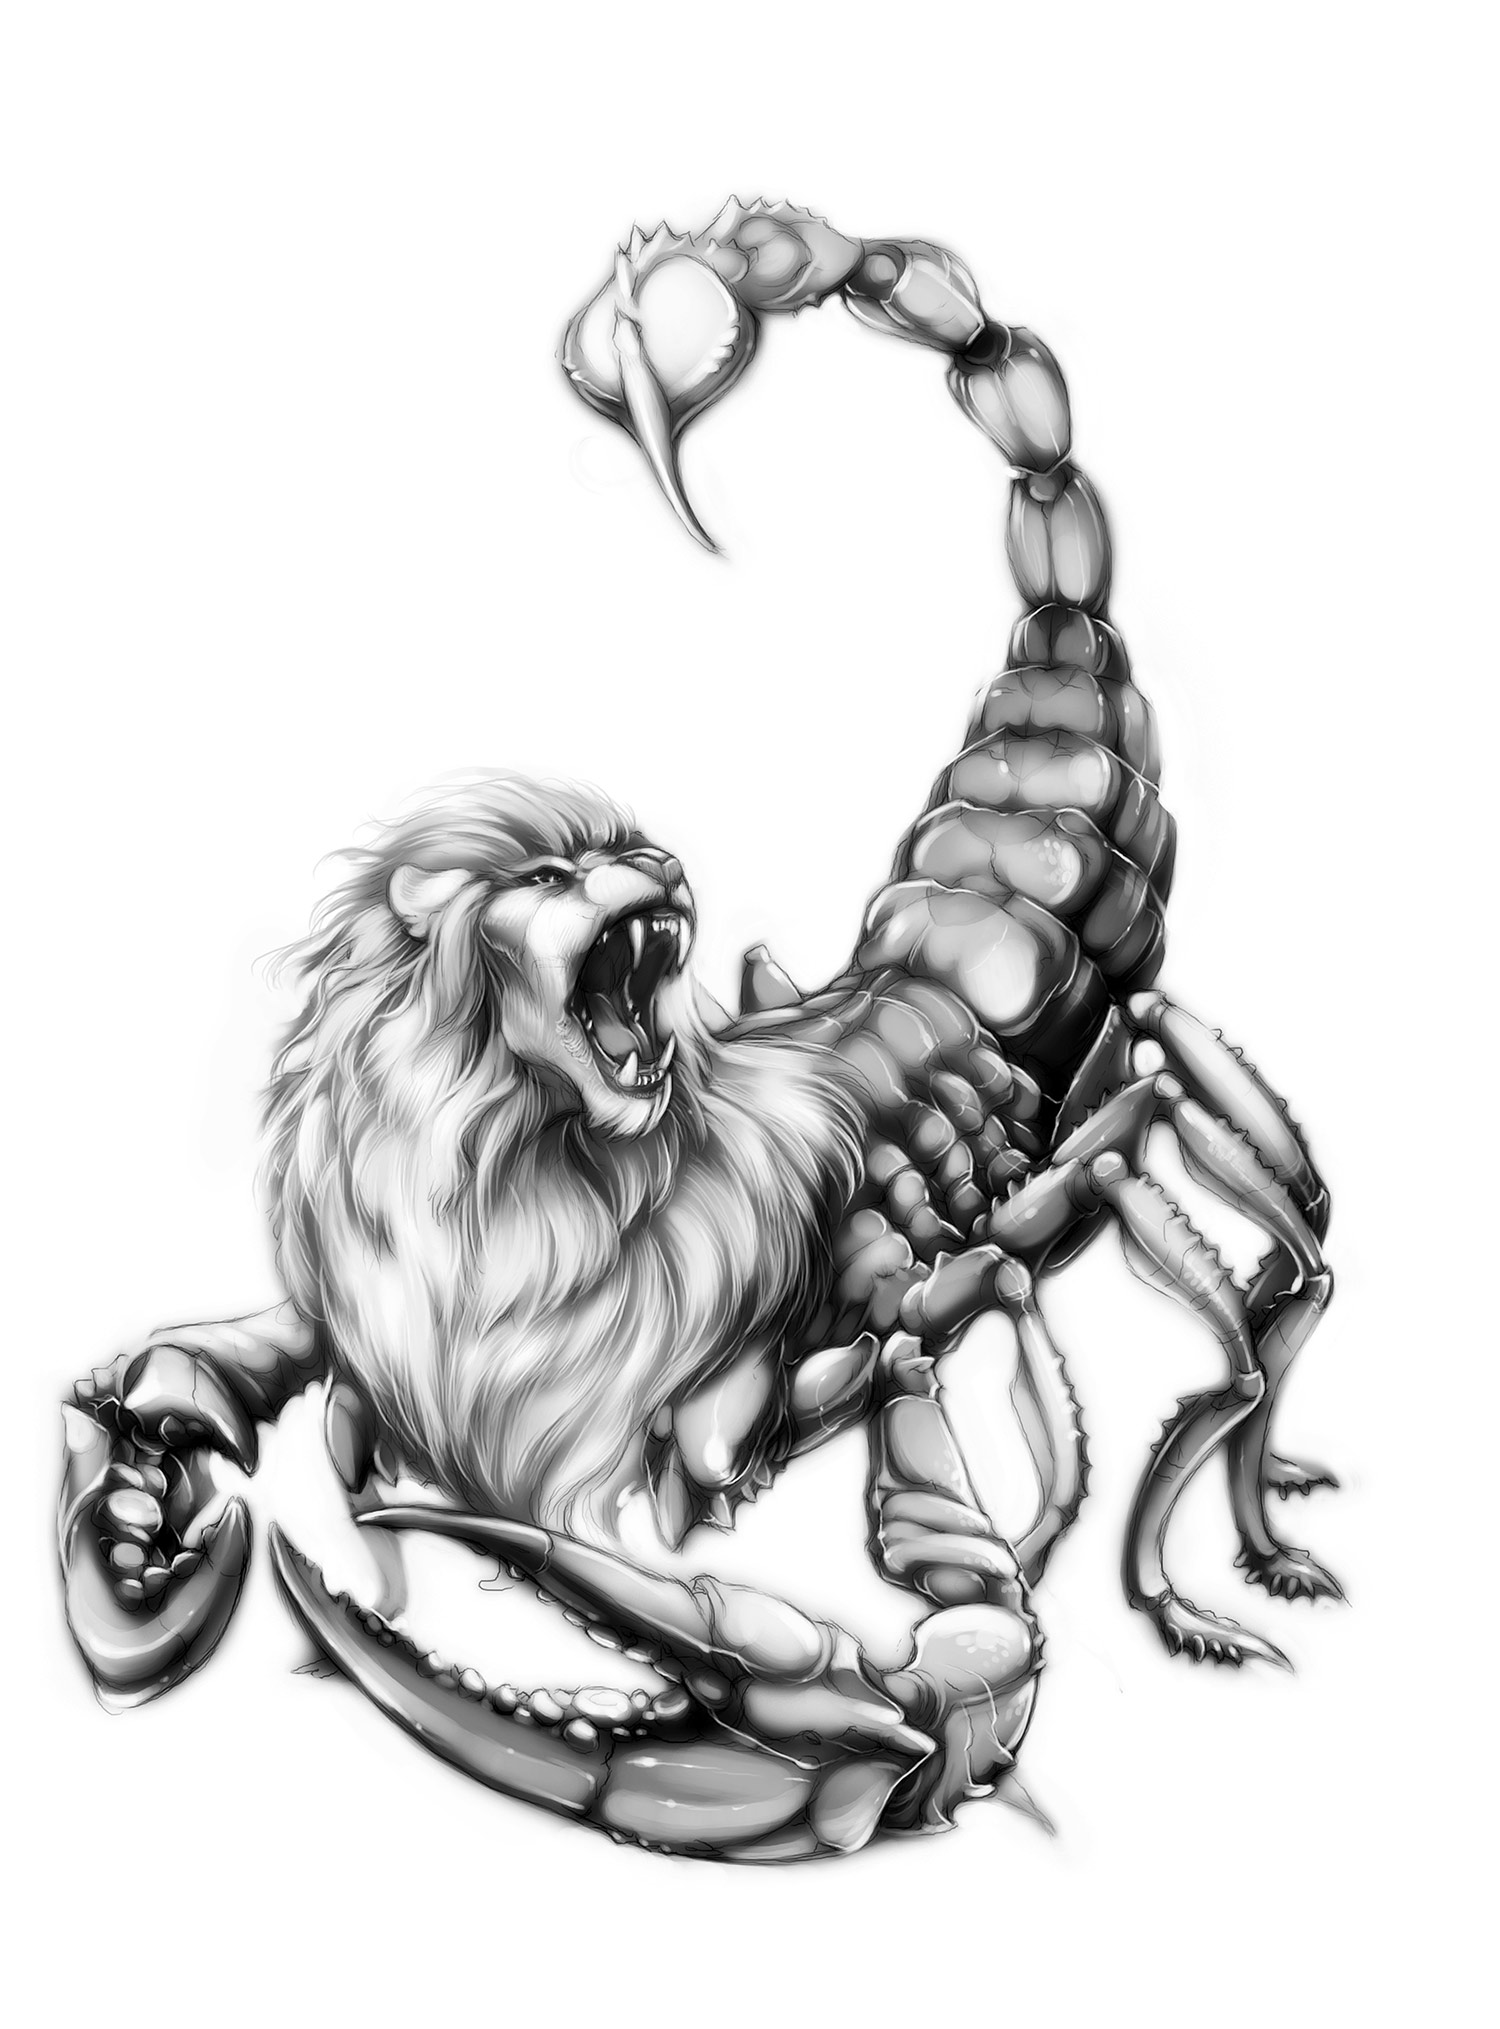 Scorpion Cartoon Drawing at GetDrawings | Free download